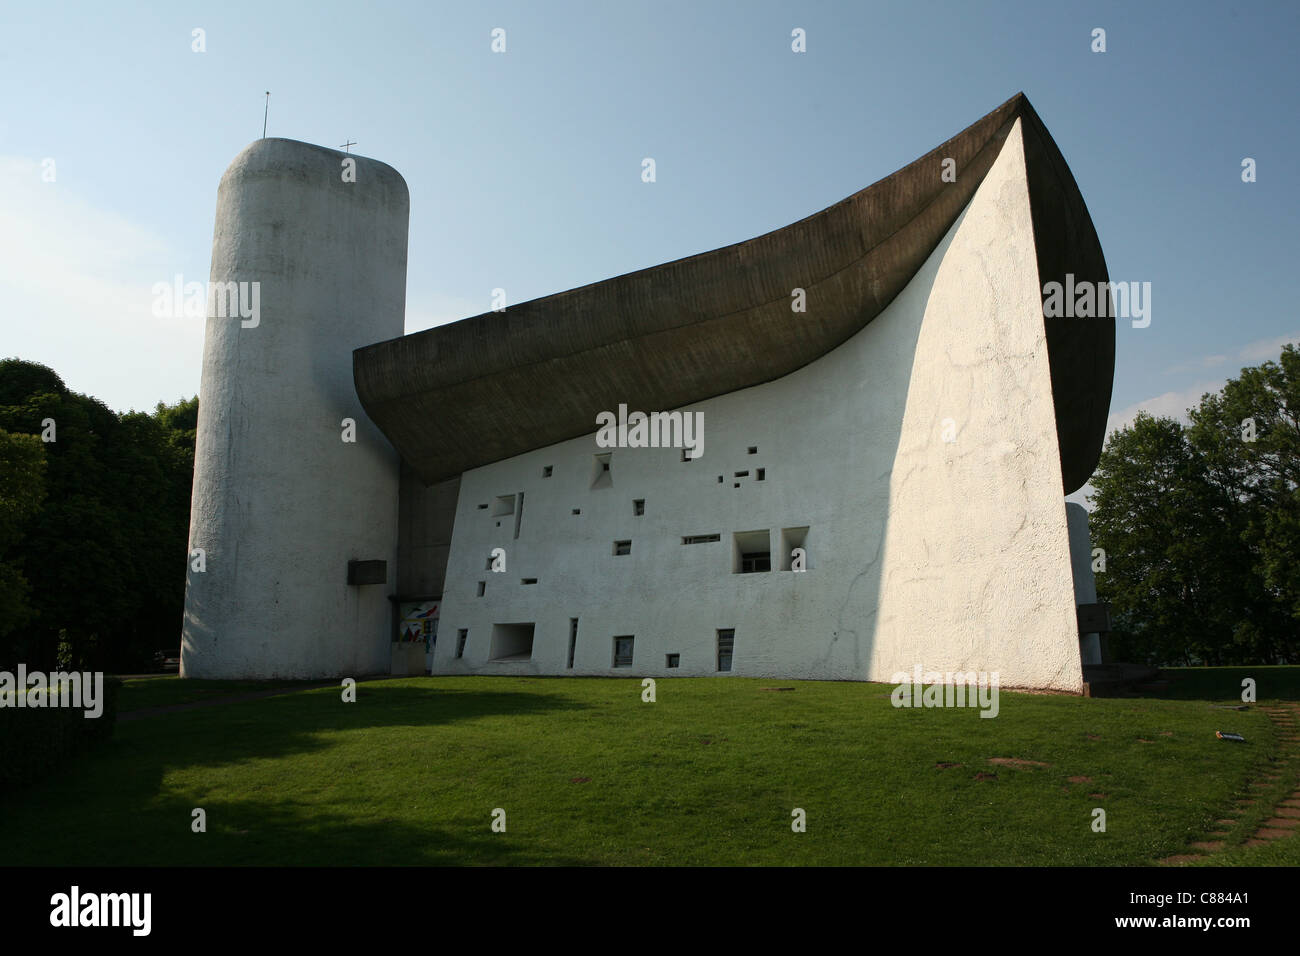 Chapel of Notre Dame du Haut by architect Le Corbusier in Ronchamp, France. Stock Photo